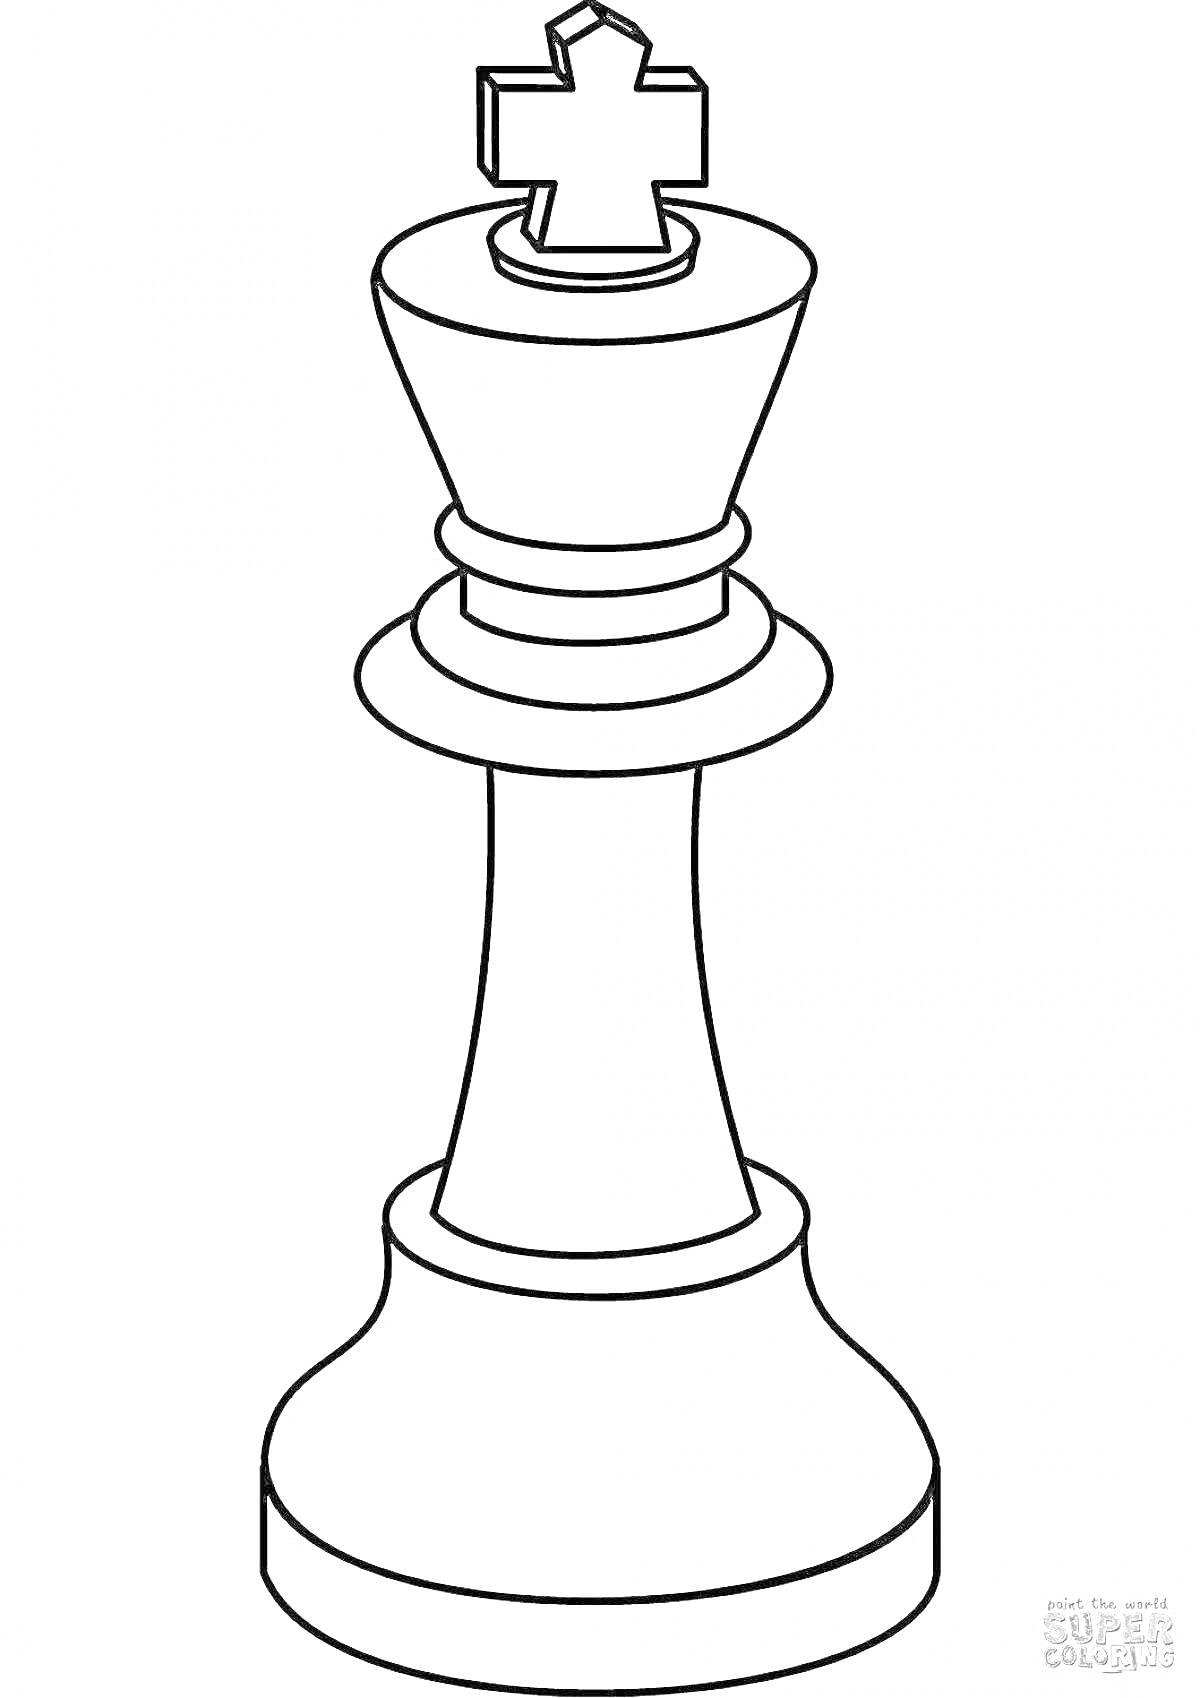 Раскраска Раскраска шахматной фигуры короля